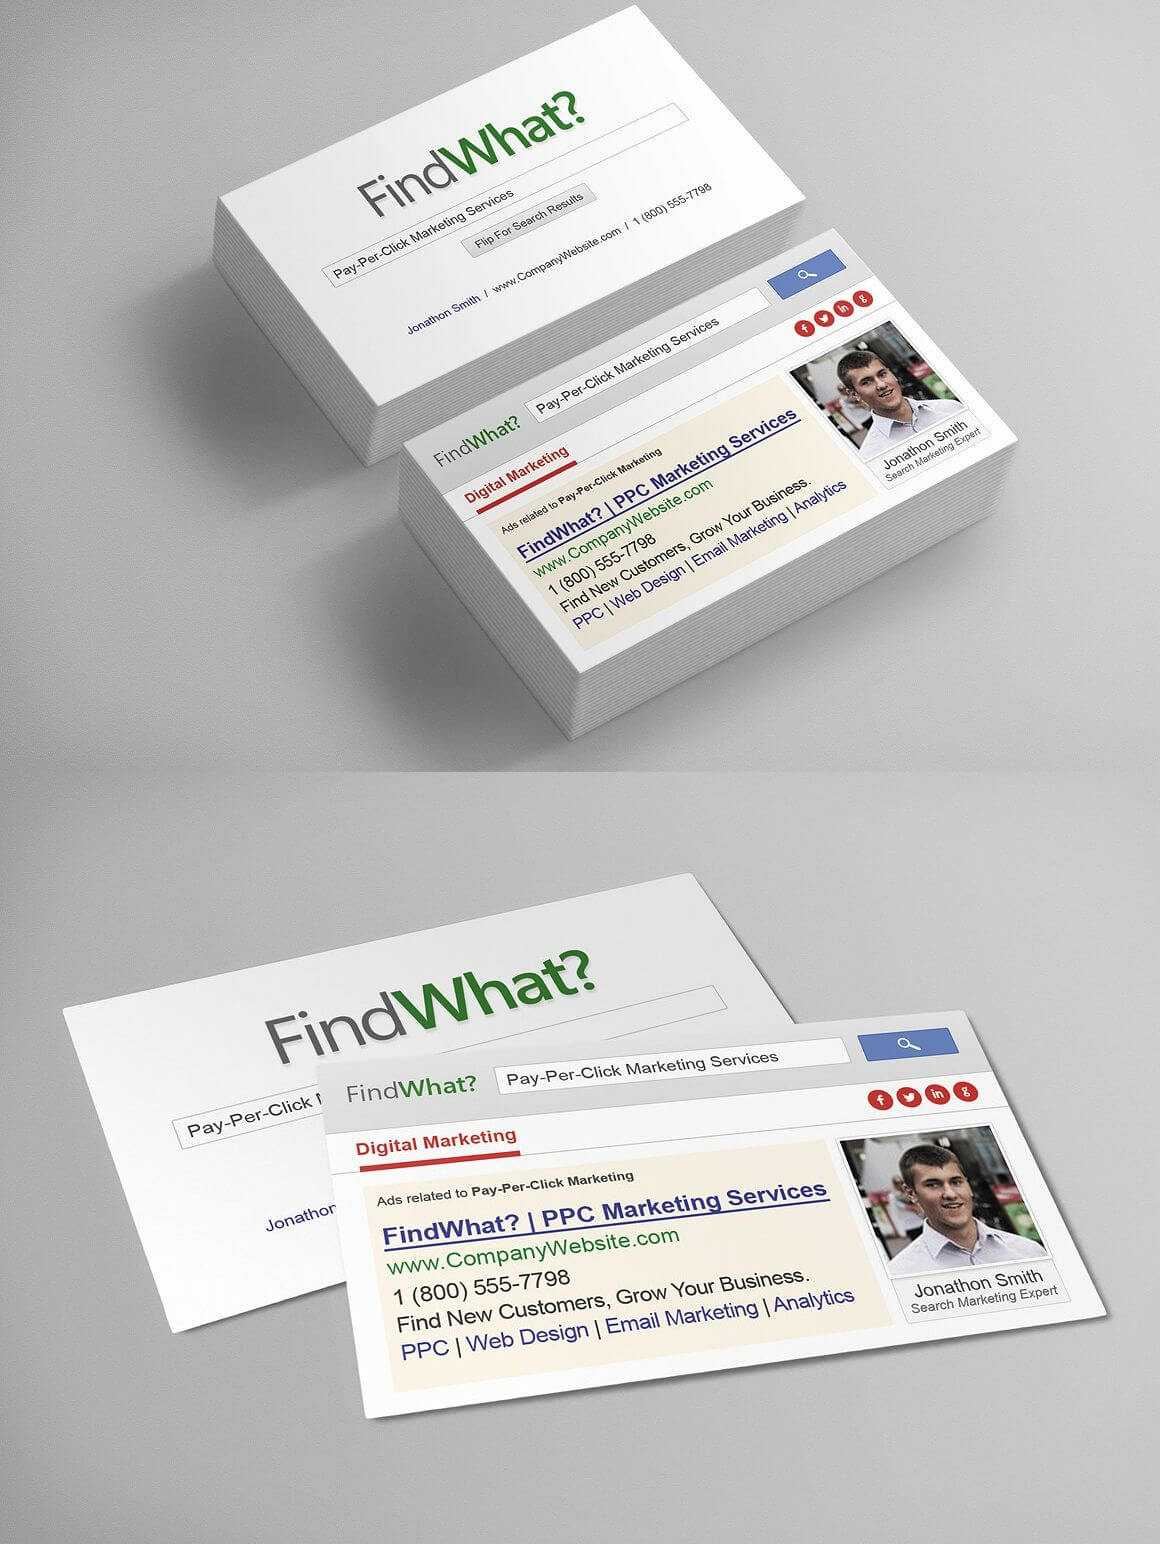 Seo Business Card Templates Psd | Business Card Dimensions Inside Business Card Size Template Psd